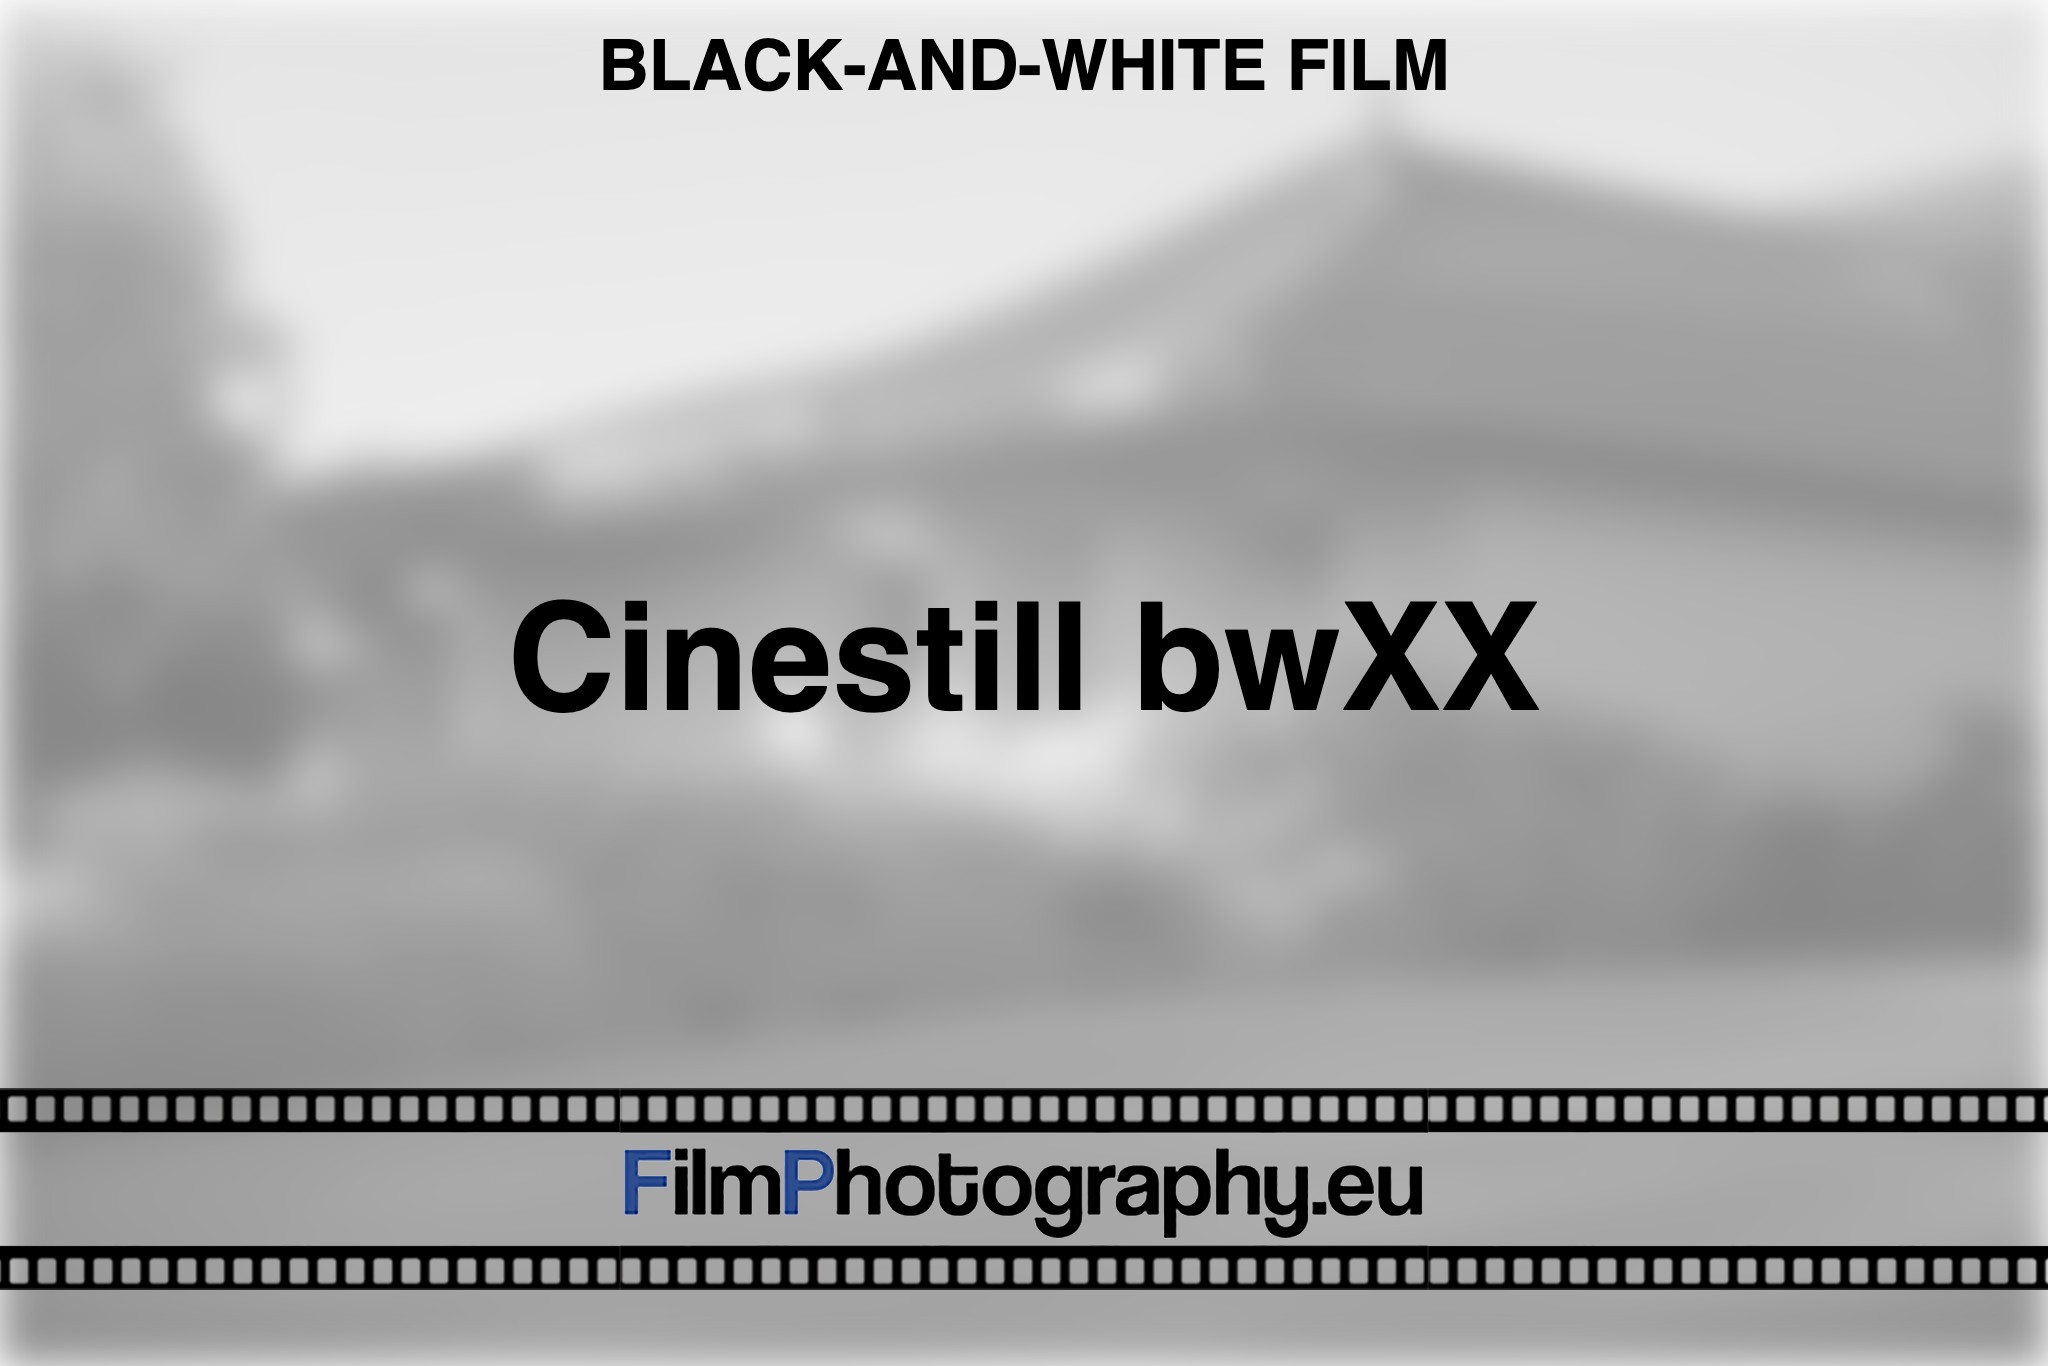 cinestill-bwxx-black-and-white-film-bnv